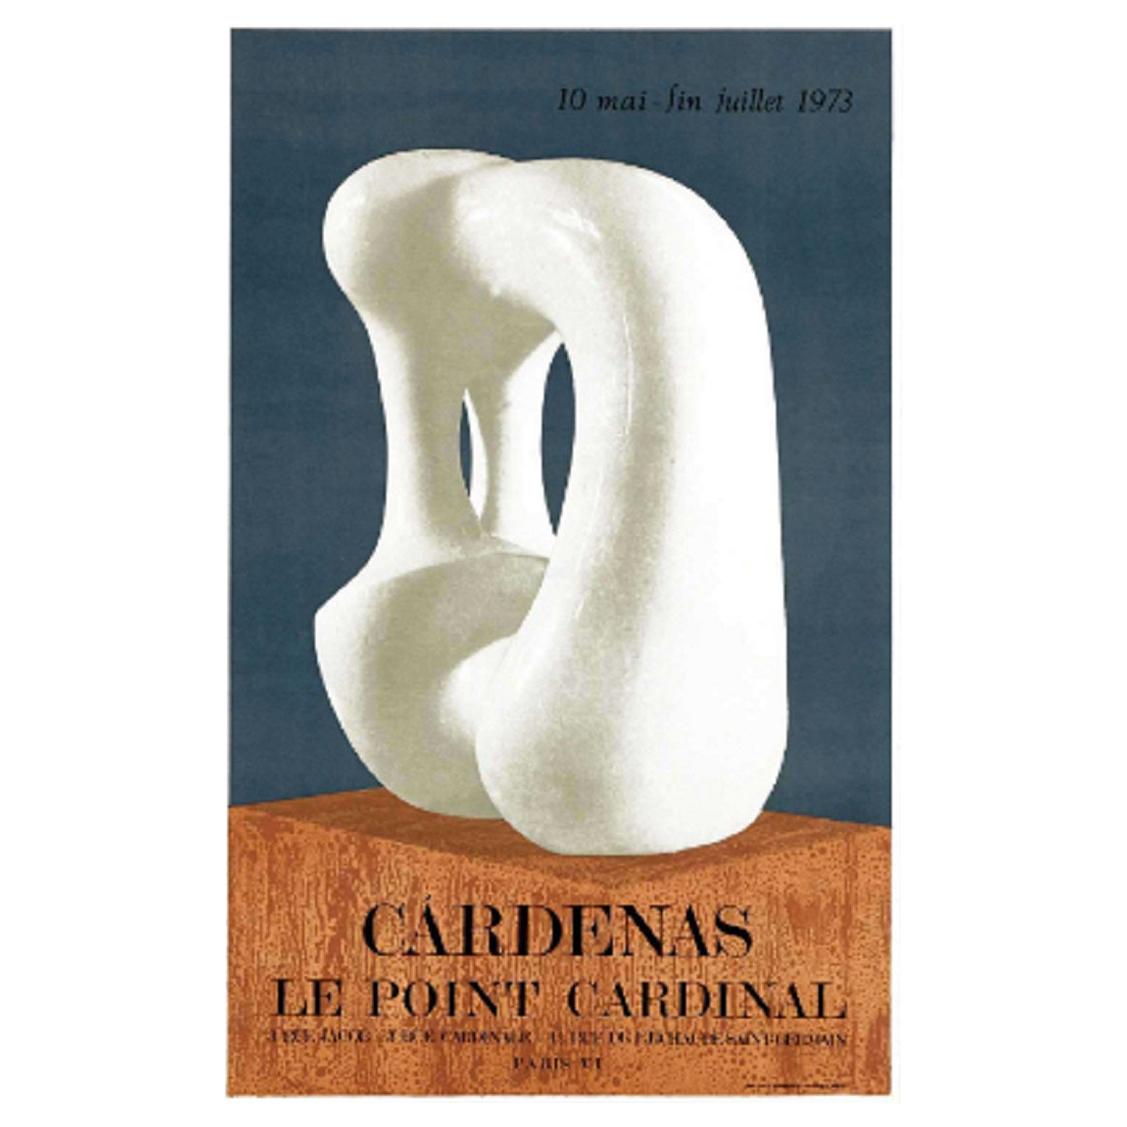 "CARDENAS Le Point Cardinal" 1973 Original Vintage Poster